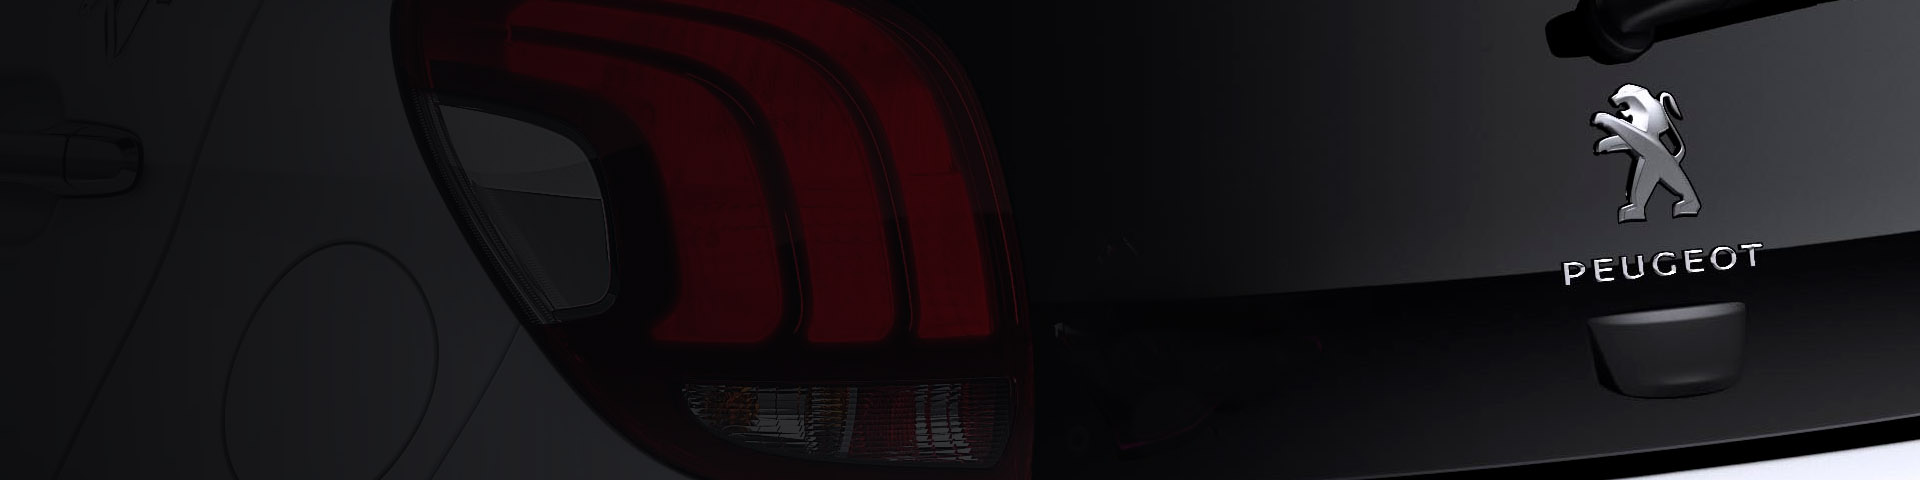 Peugeot 508 Backdrop